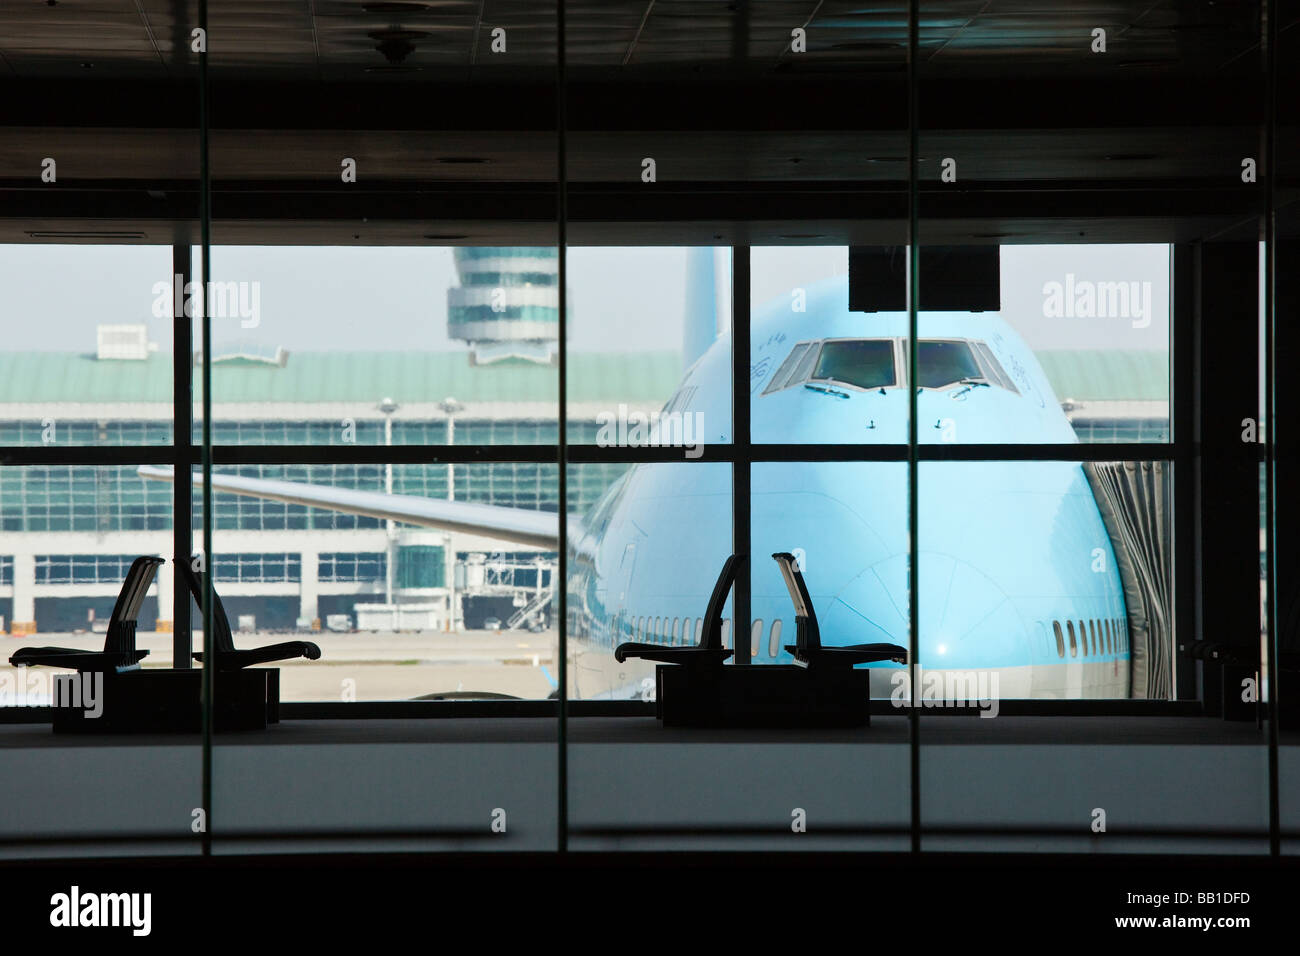 Korean Airlines Plane in ICN Seoul Incheon International Airport Stock Photo